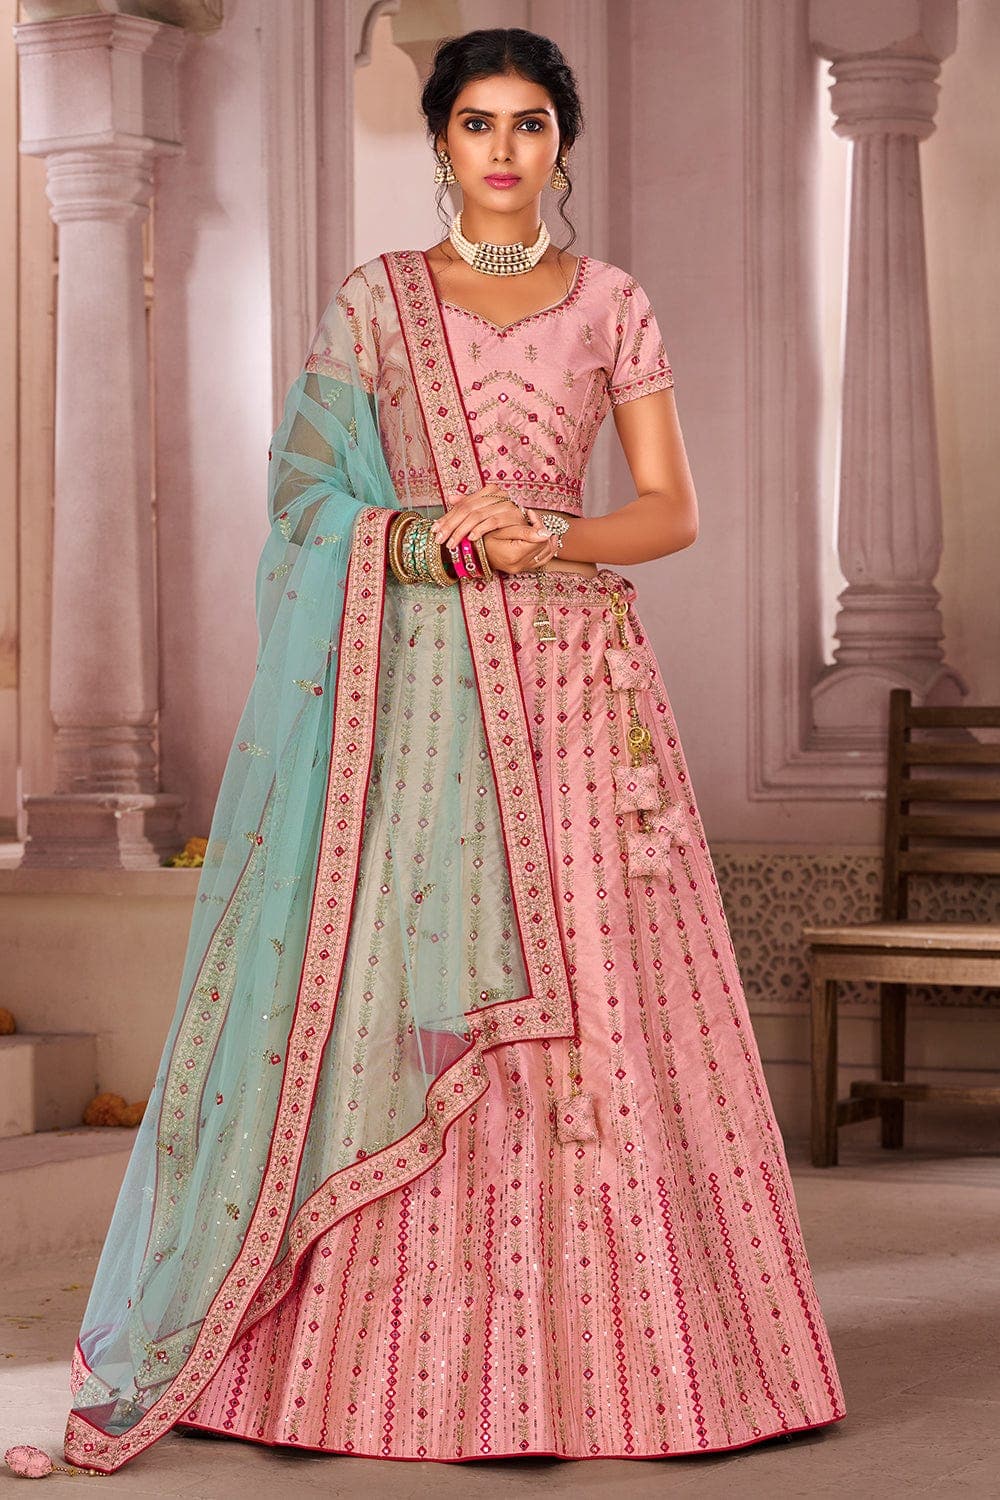 Bridal Sarees Online India -Stunning Wedding Sarees for Brides